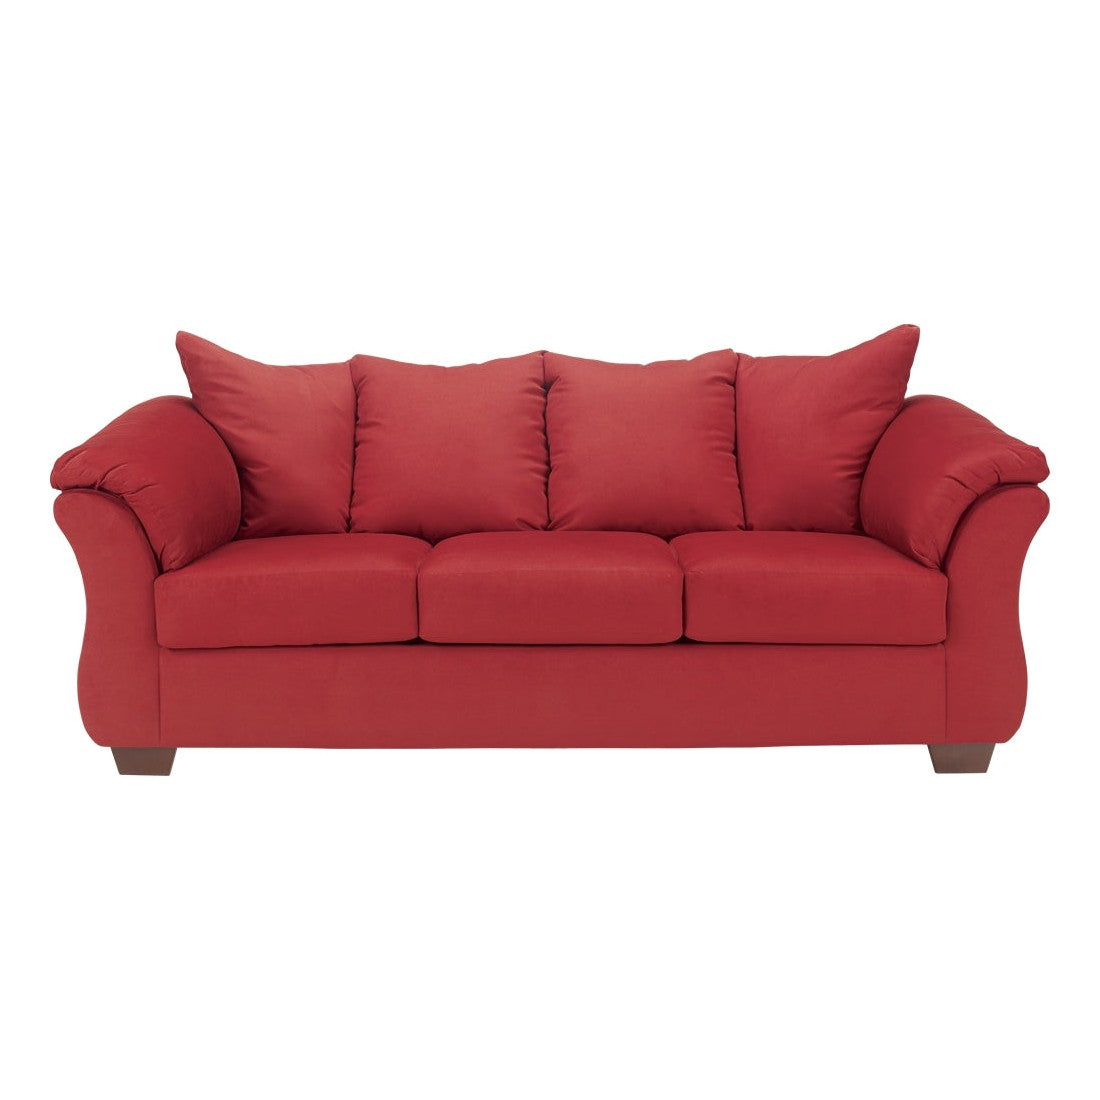 Darcy Full Sofa Sleeper Ash-7500136